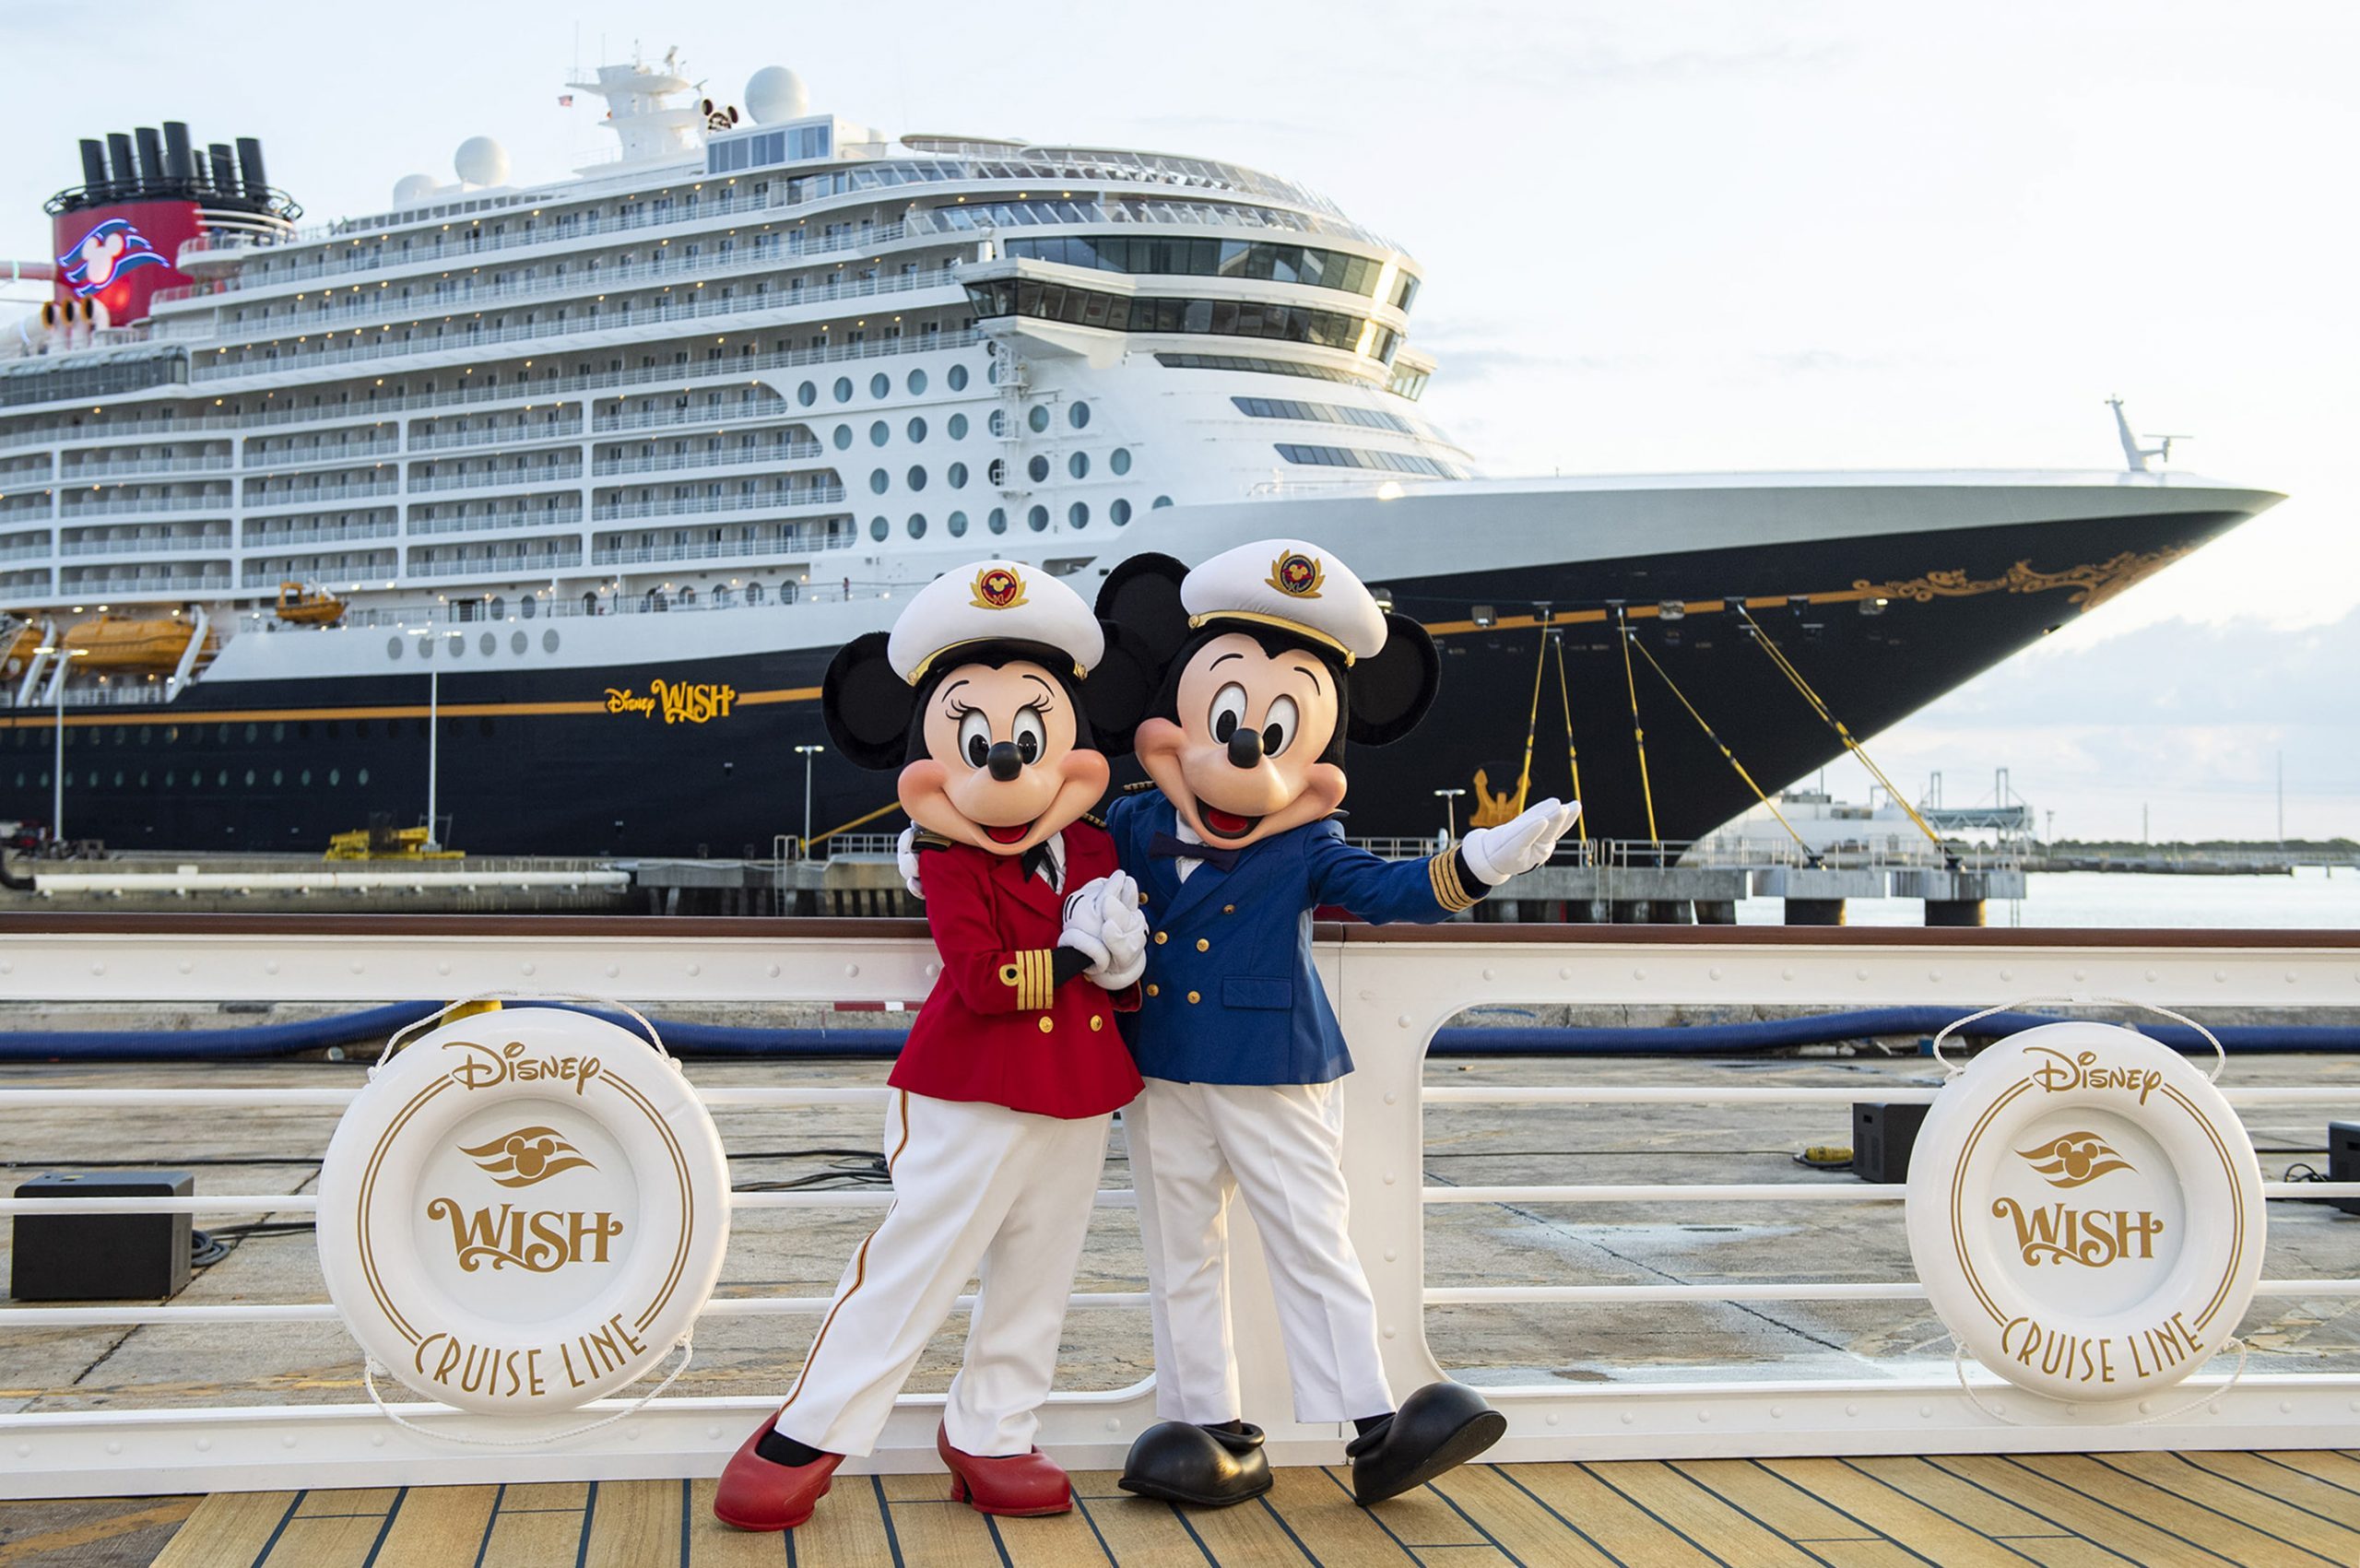 Disney Wish Cruise Ship Menus and Restaurant Guide